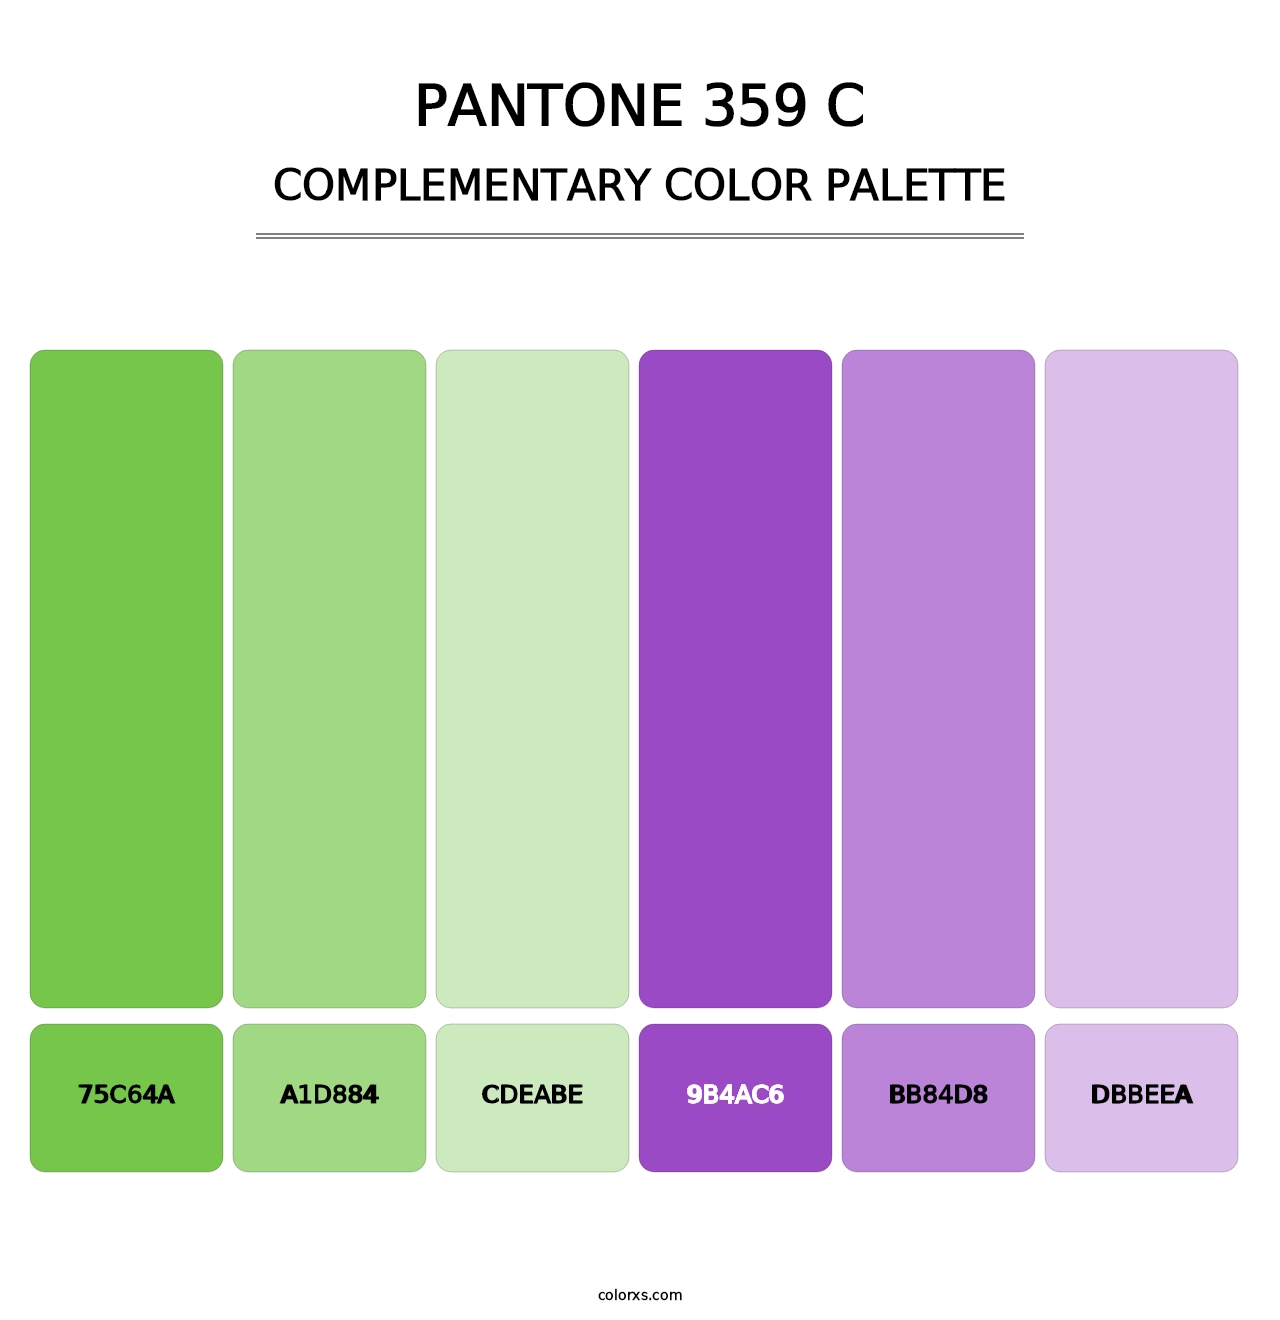 PANTONE 359 C - Complementary Color Palette